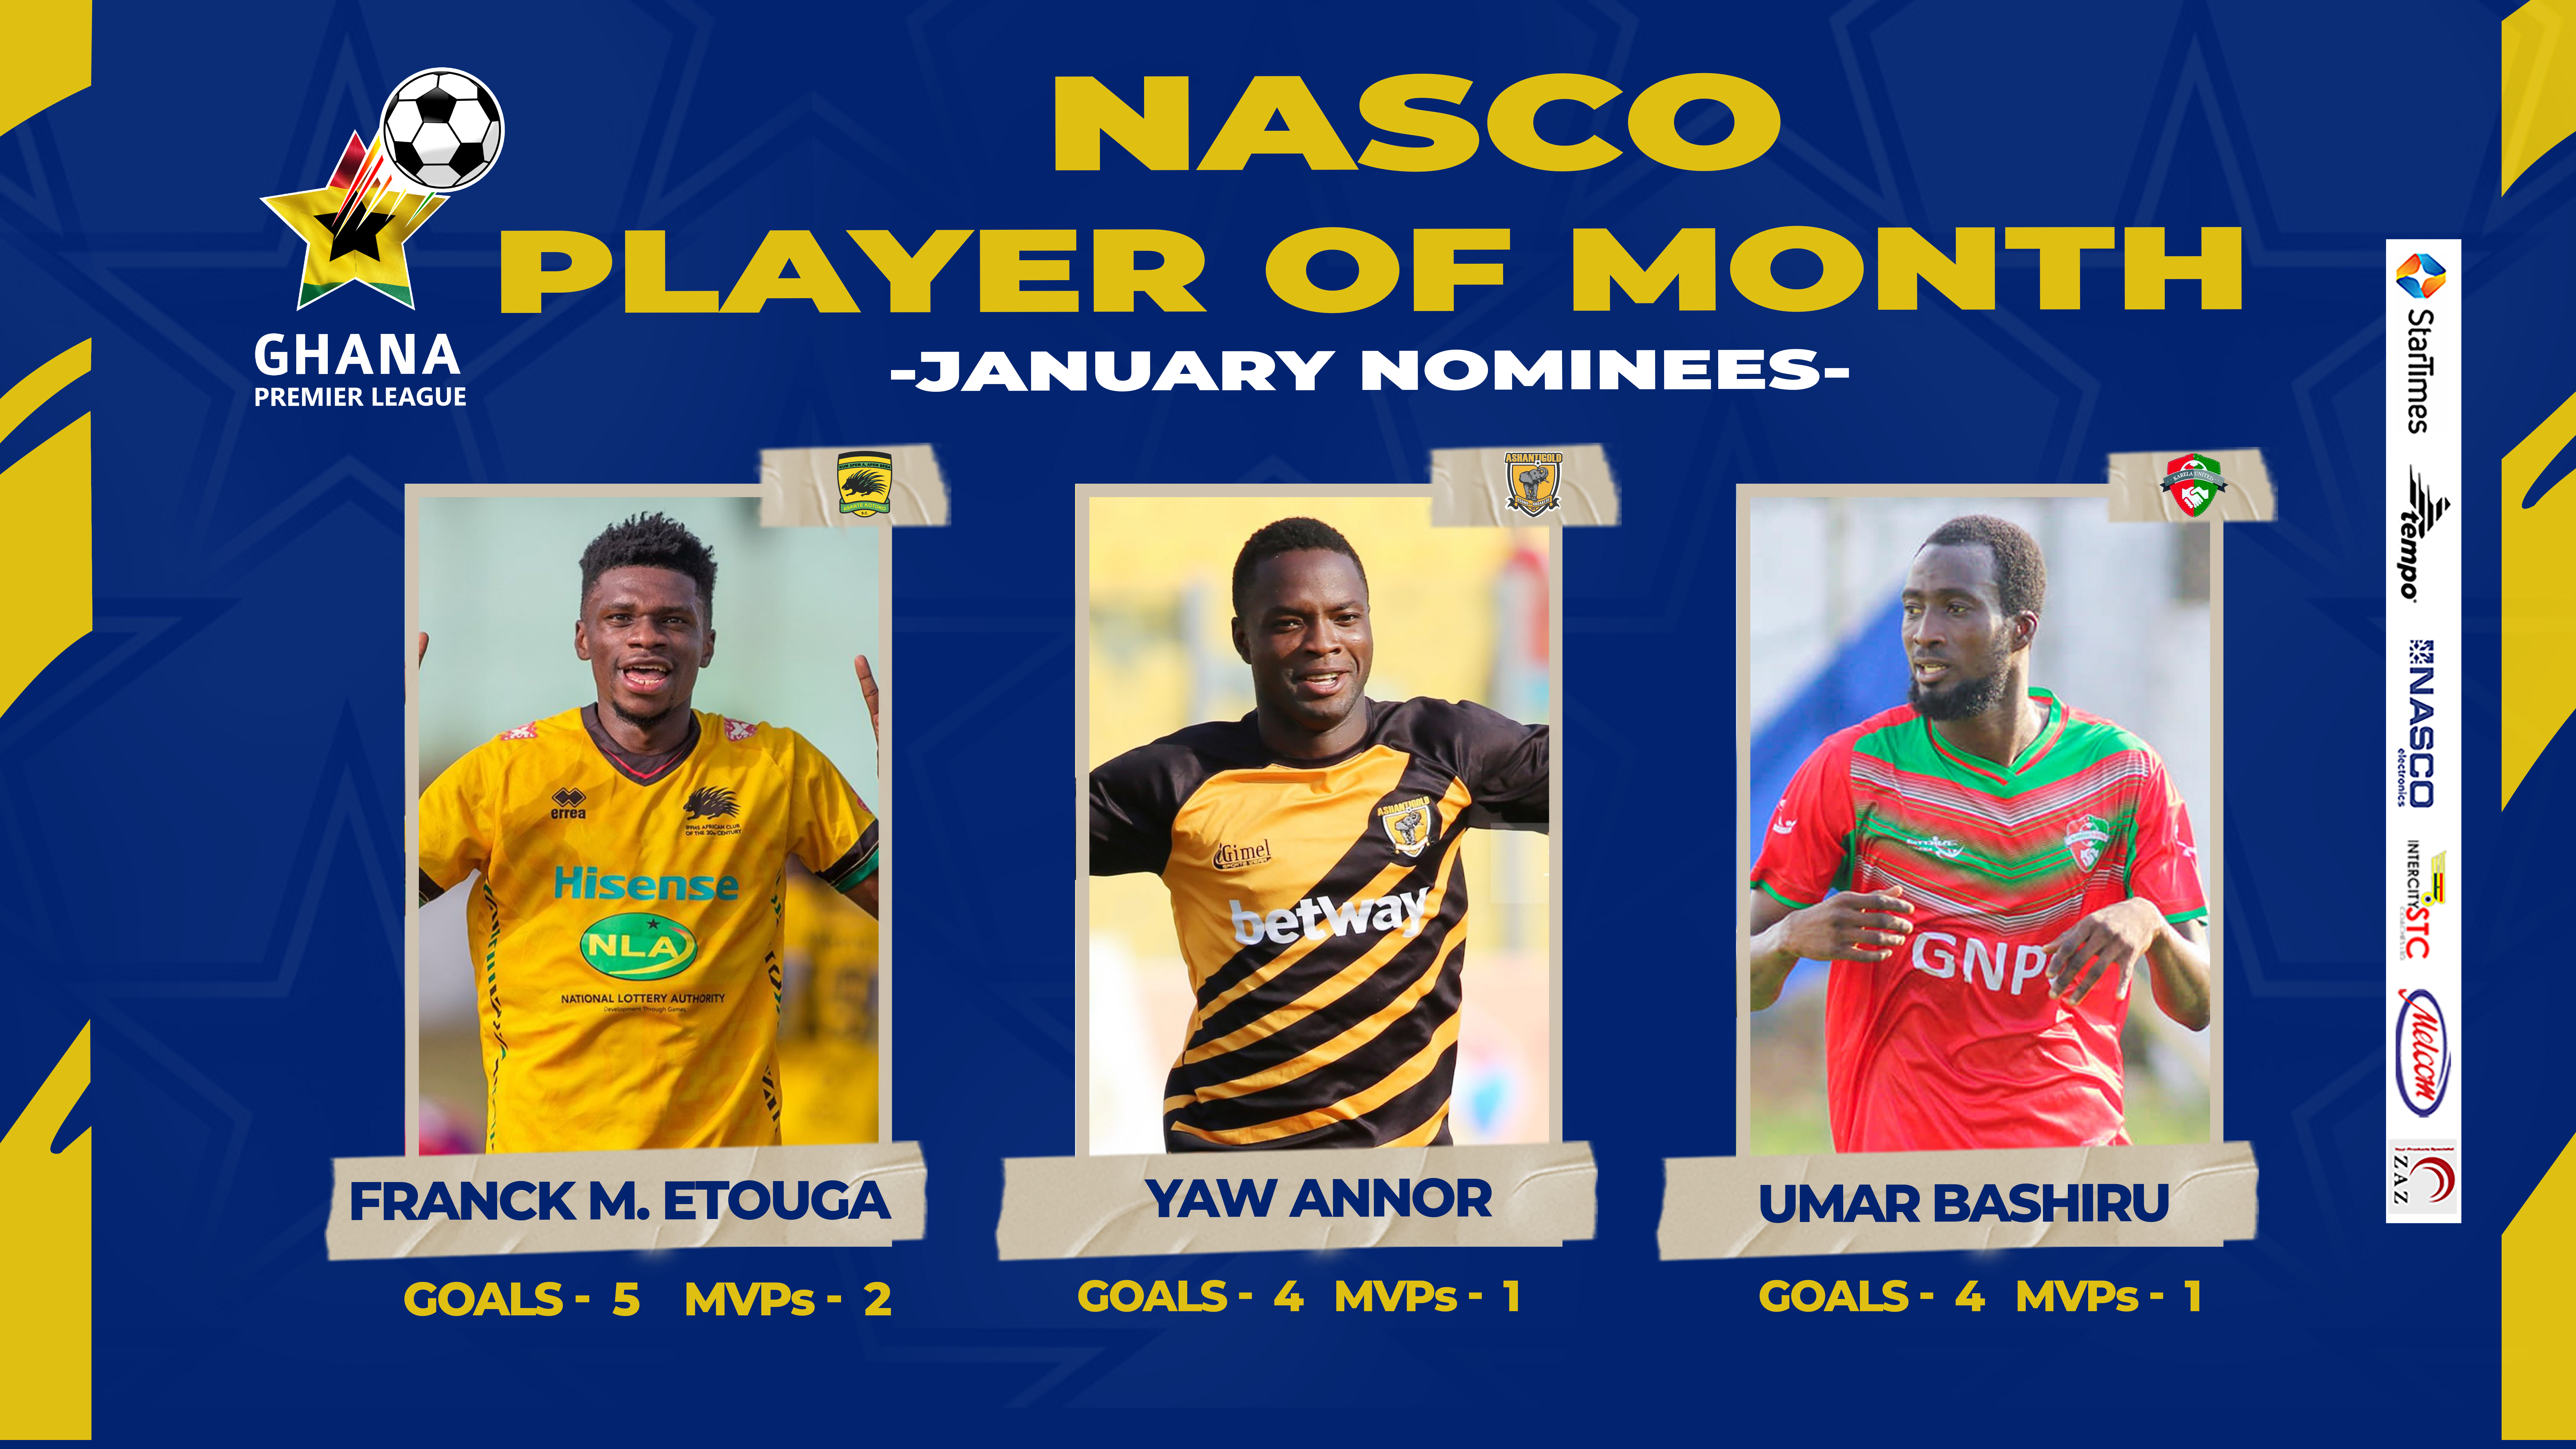 Etouga, Annor & Bashiru nominated for NASCO Player of the Month - January